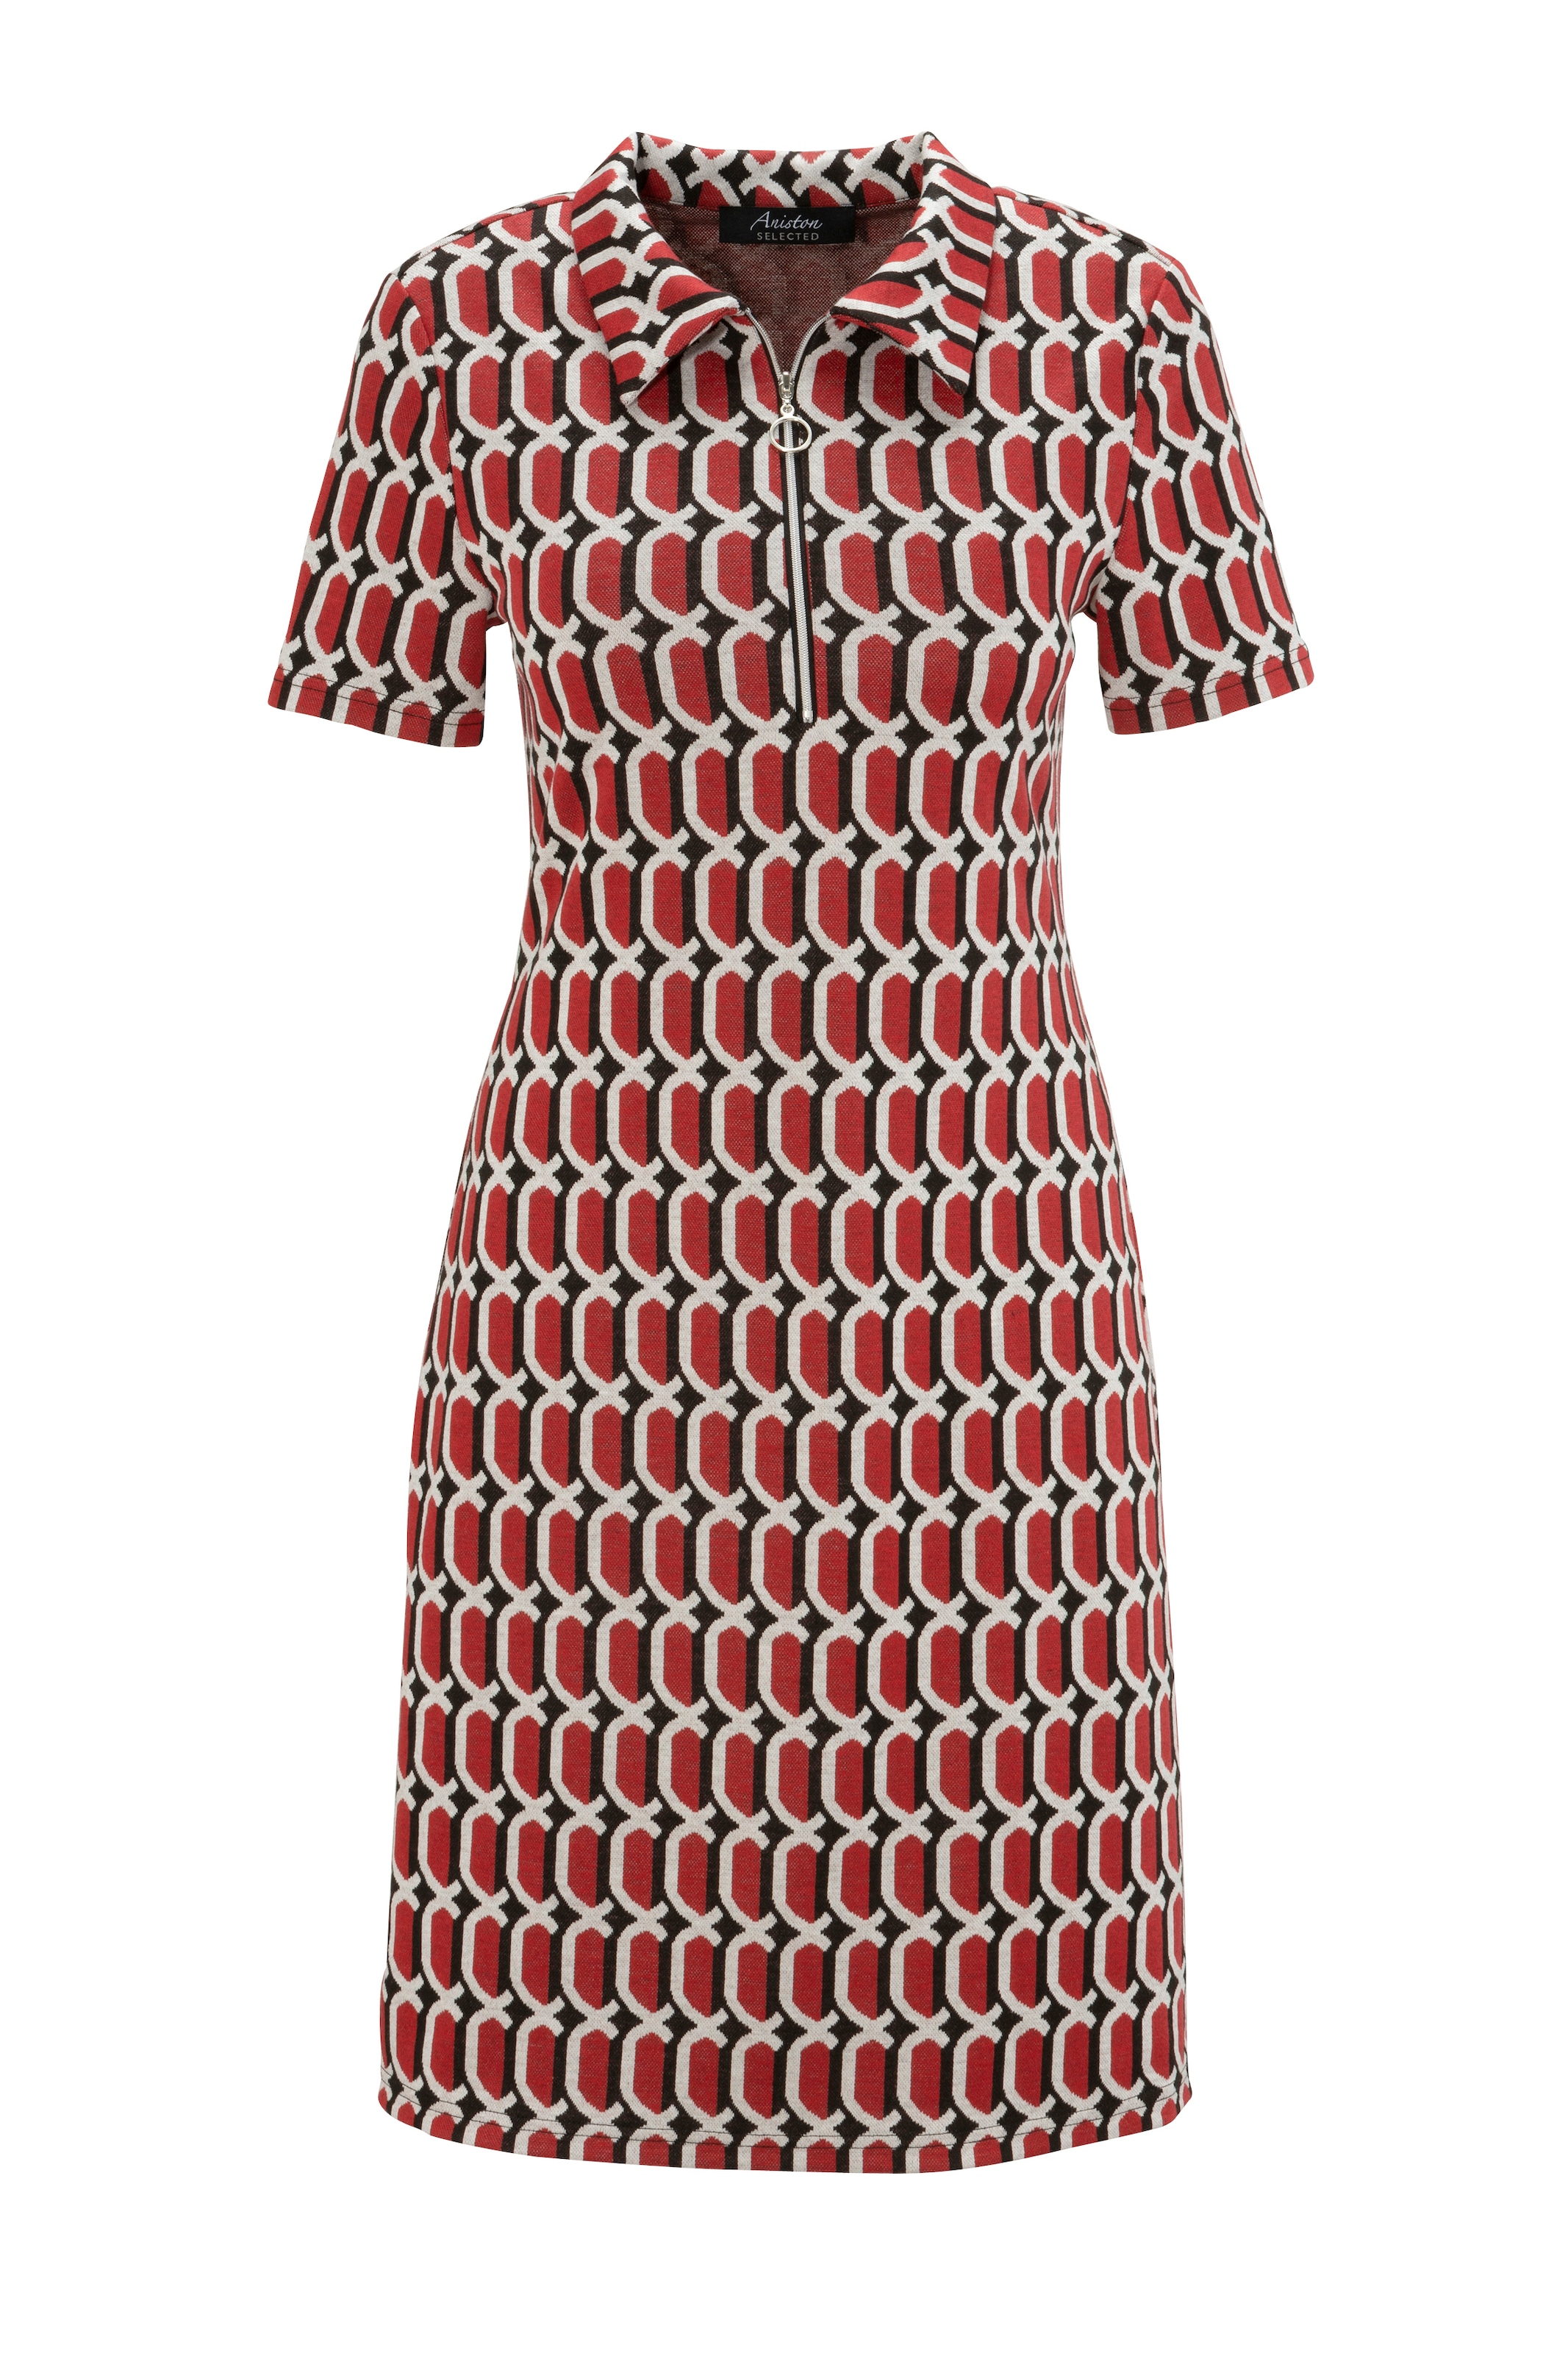 Aniston SELECTED Jerseykleid, mit silberfarbenem Reissverschluss - NEUE KOLLEKTION